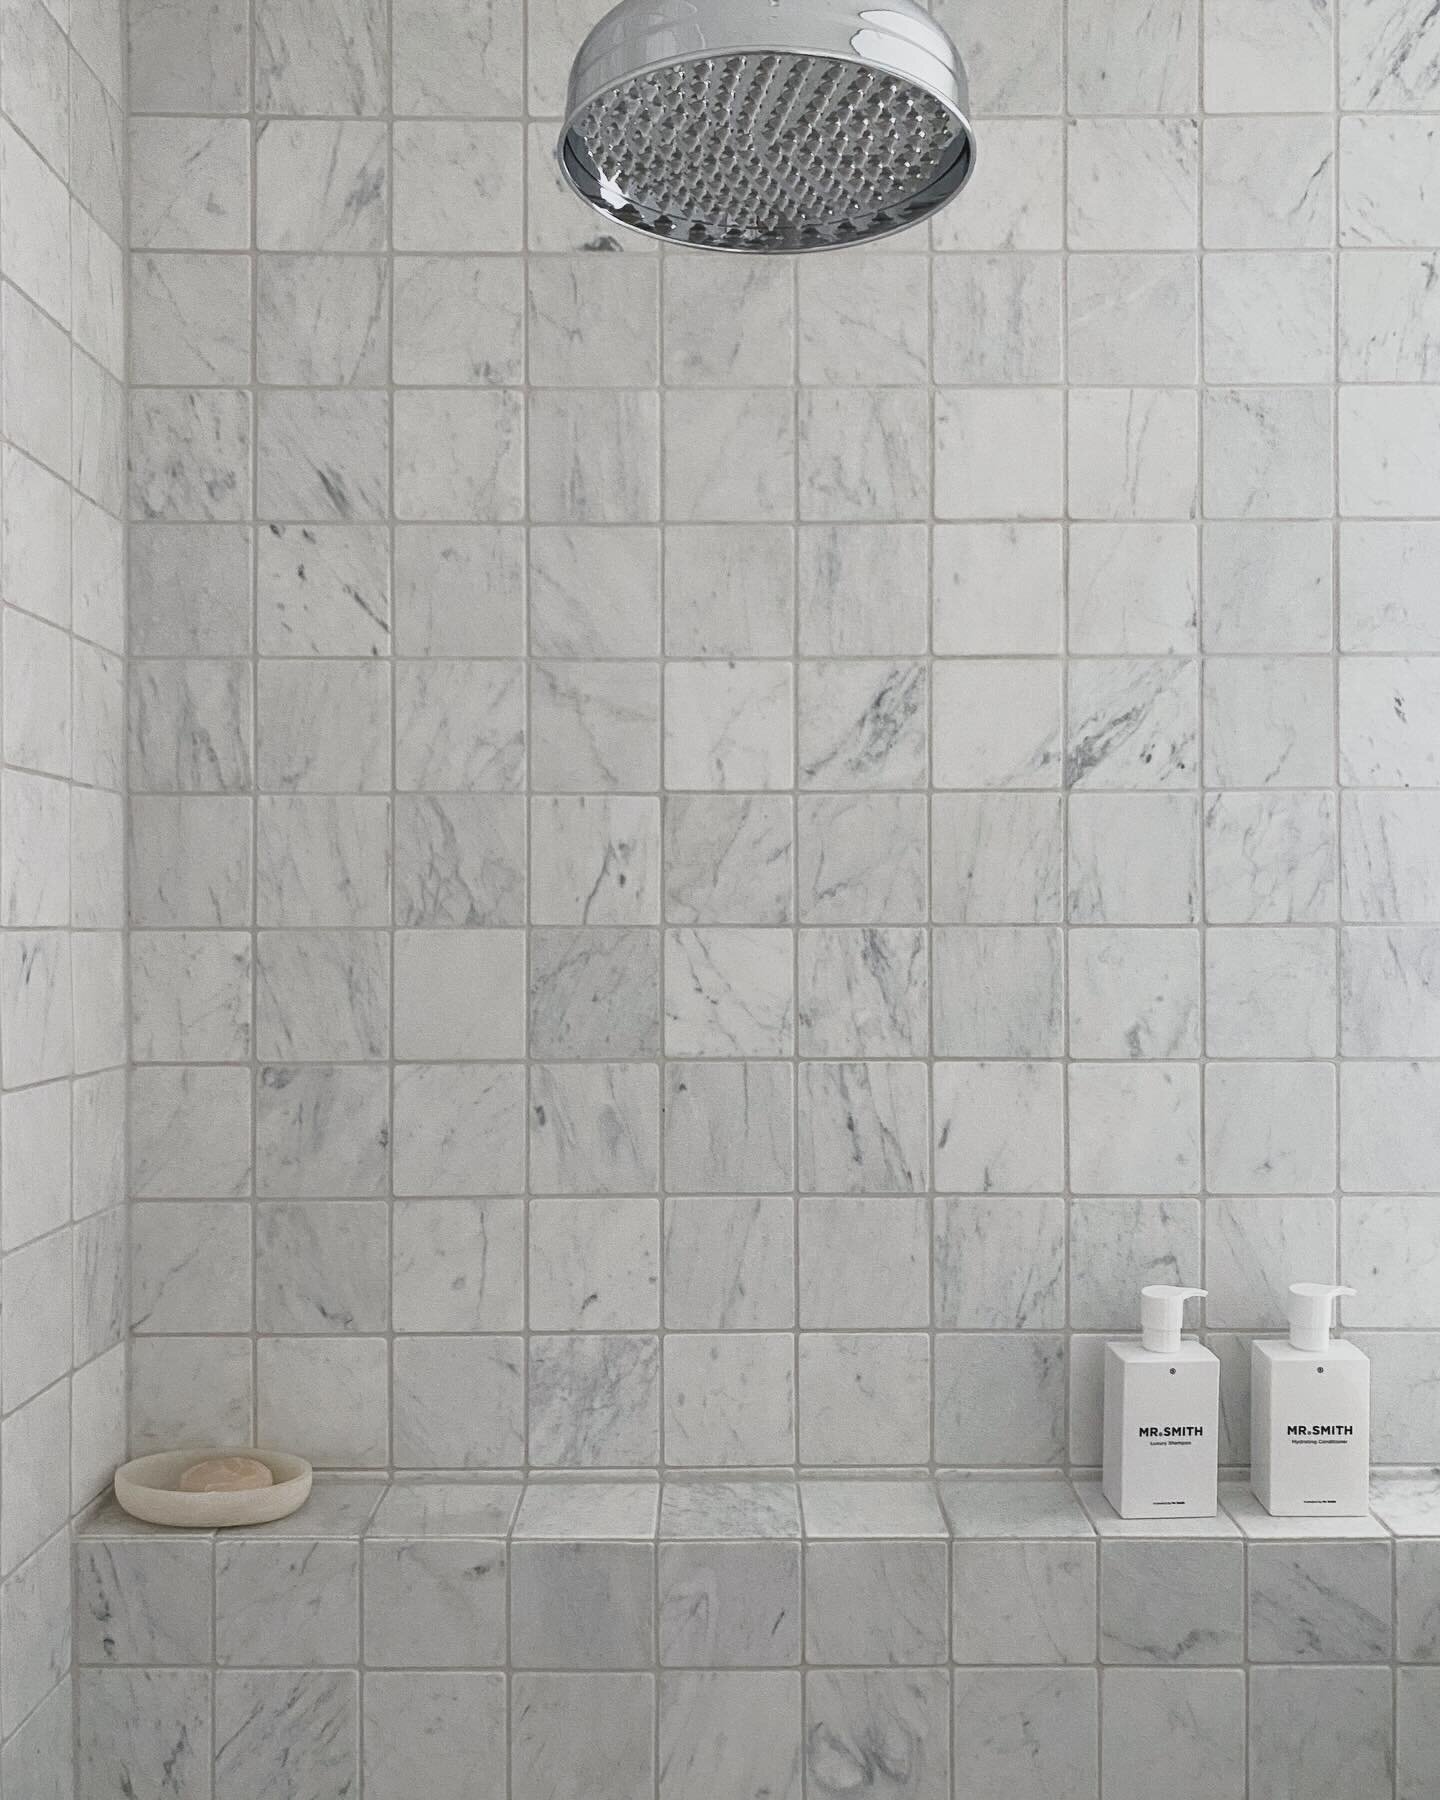 Southern Highlands shower 💦

〰️

#thedesignpaddock
#tdpinteriors
#bathroomdesign
#tumbledmarble